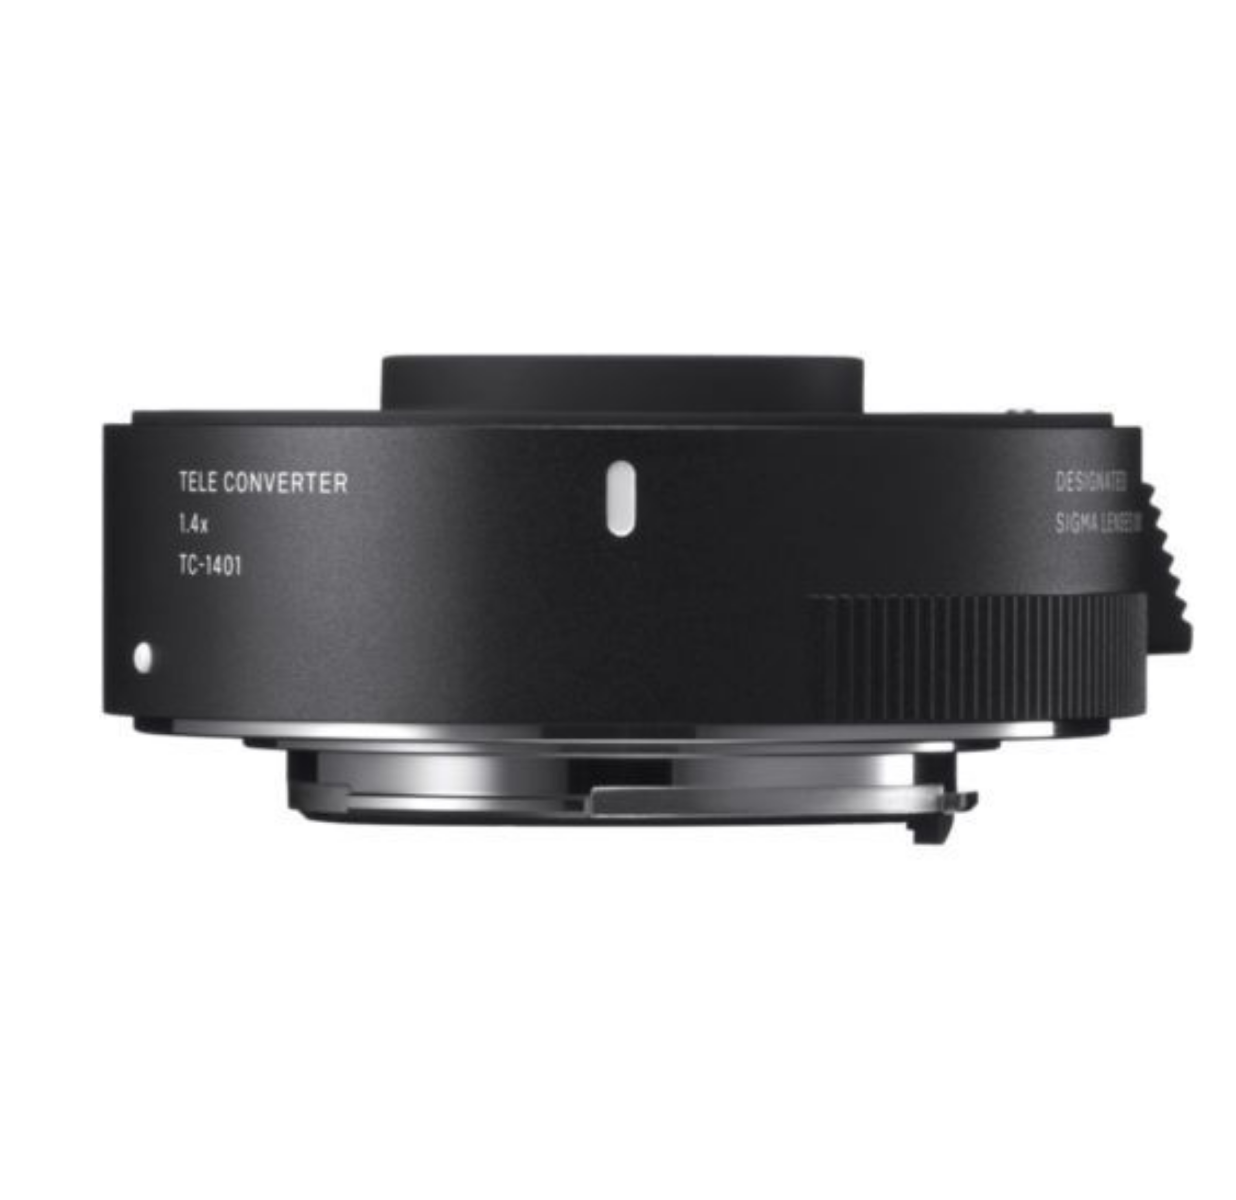 Product Image of Clearance Sigma TC-1401 1.4x Teleconverter for certain Nikon mount Sigma lenses